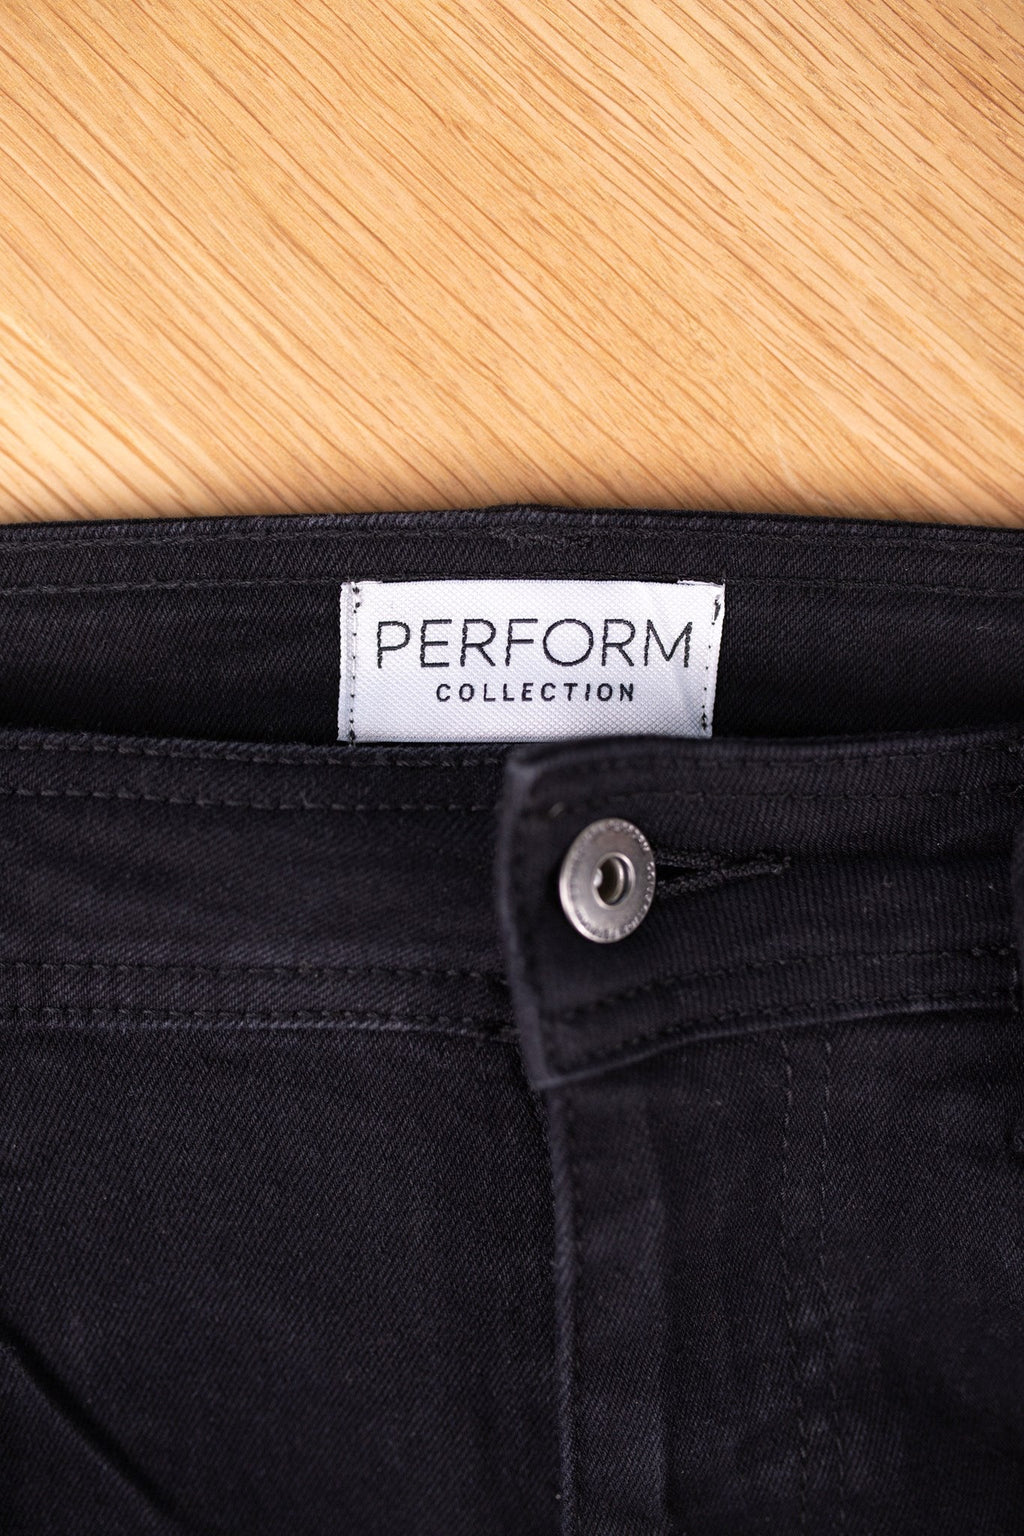 The original Performance Jeans - dubh